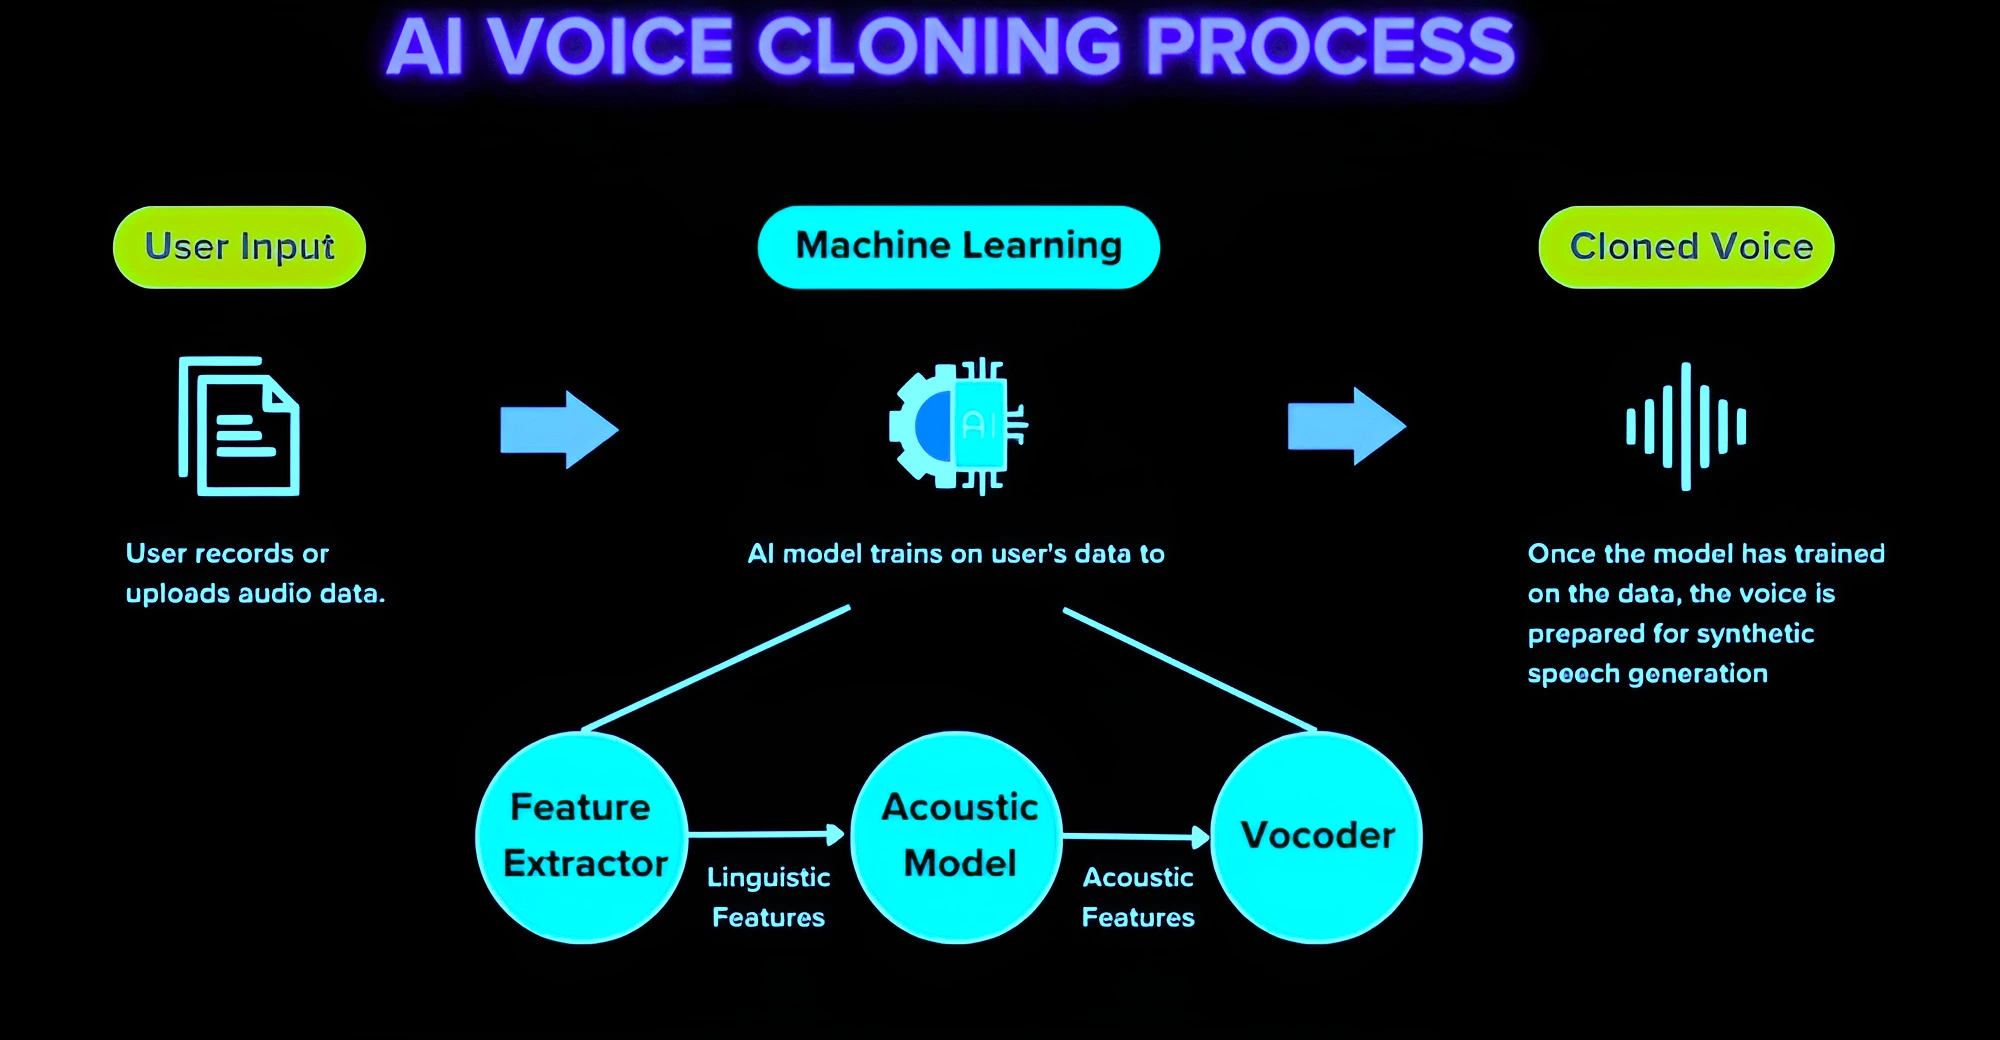 Voice Cloning